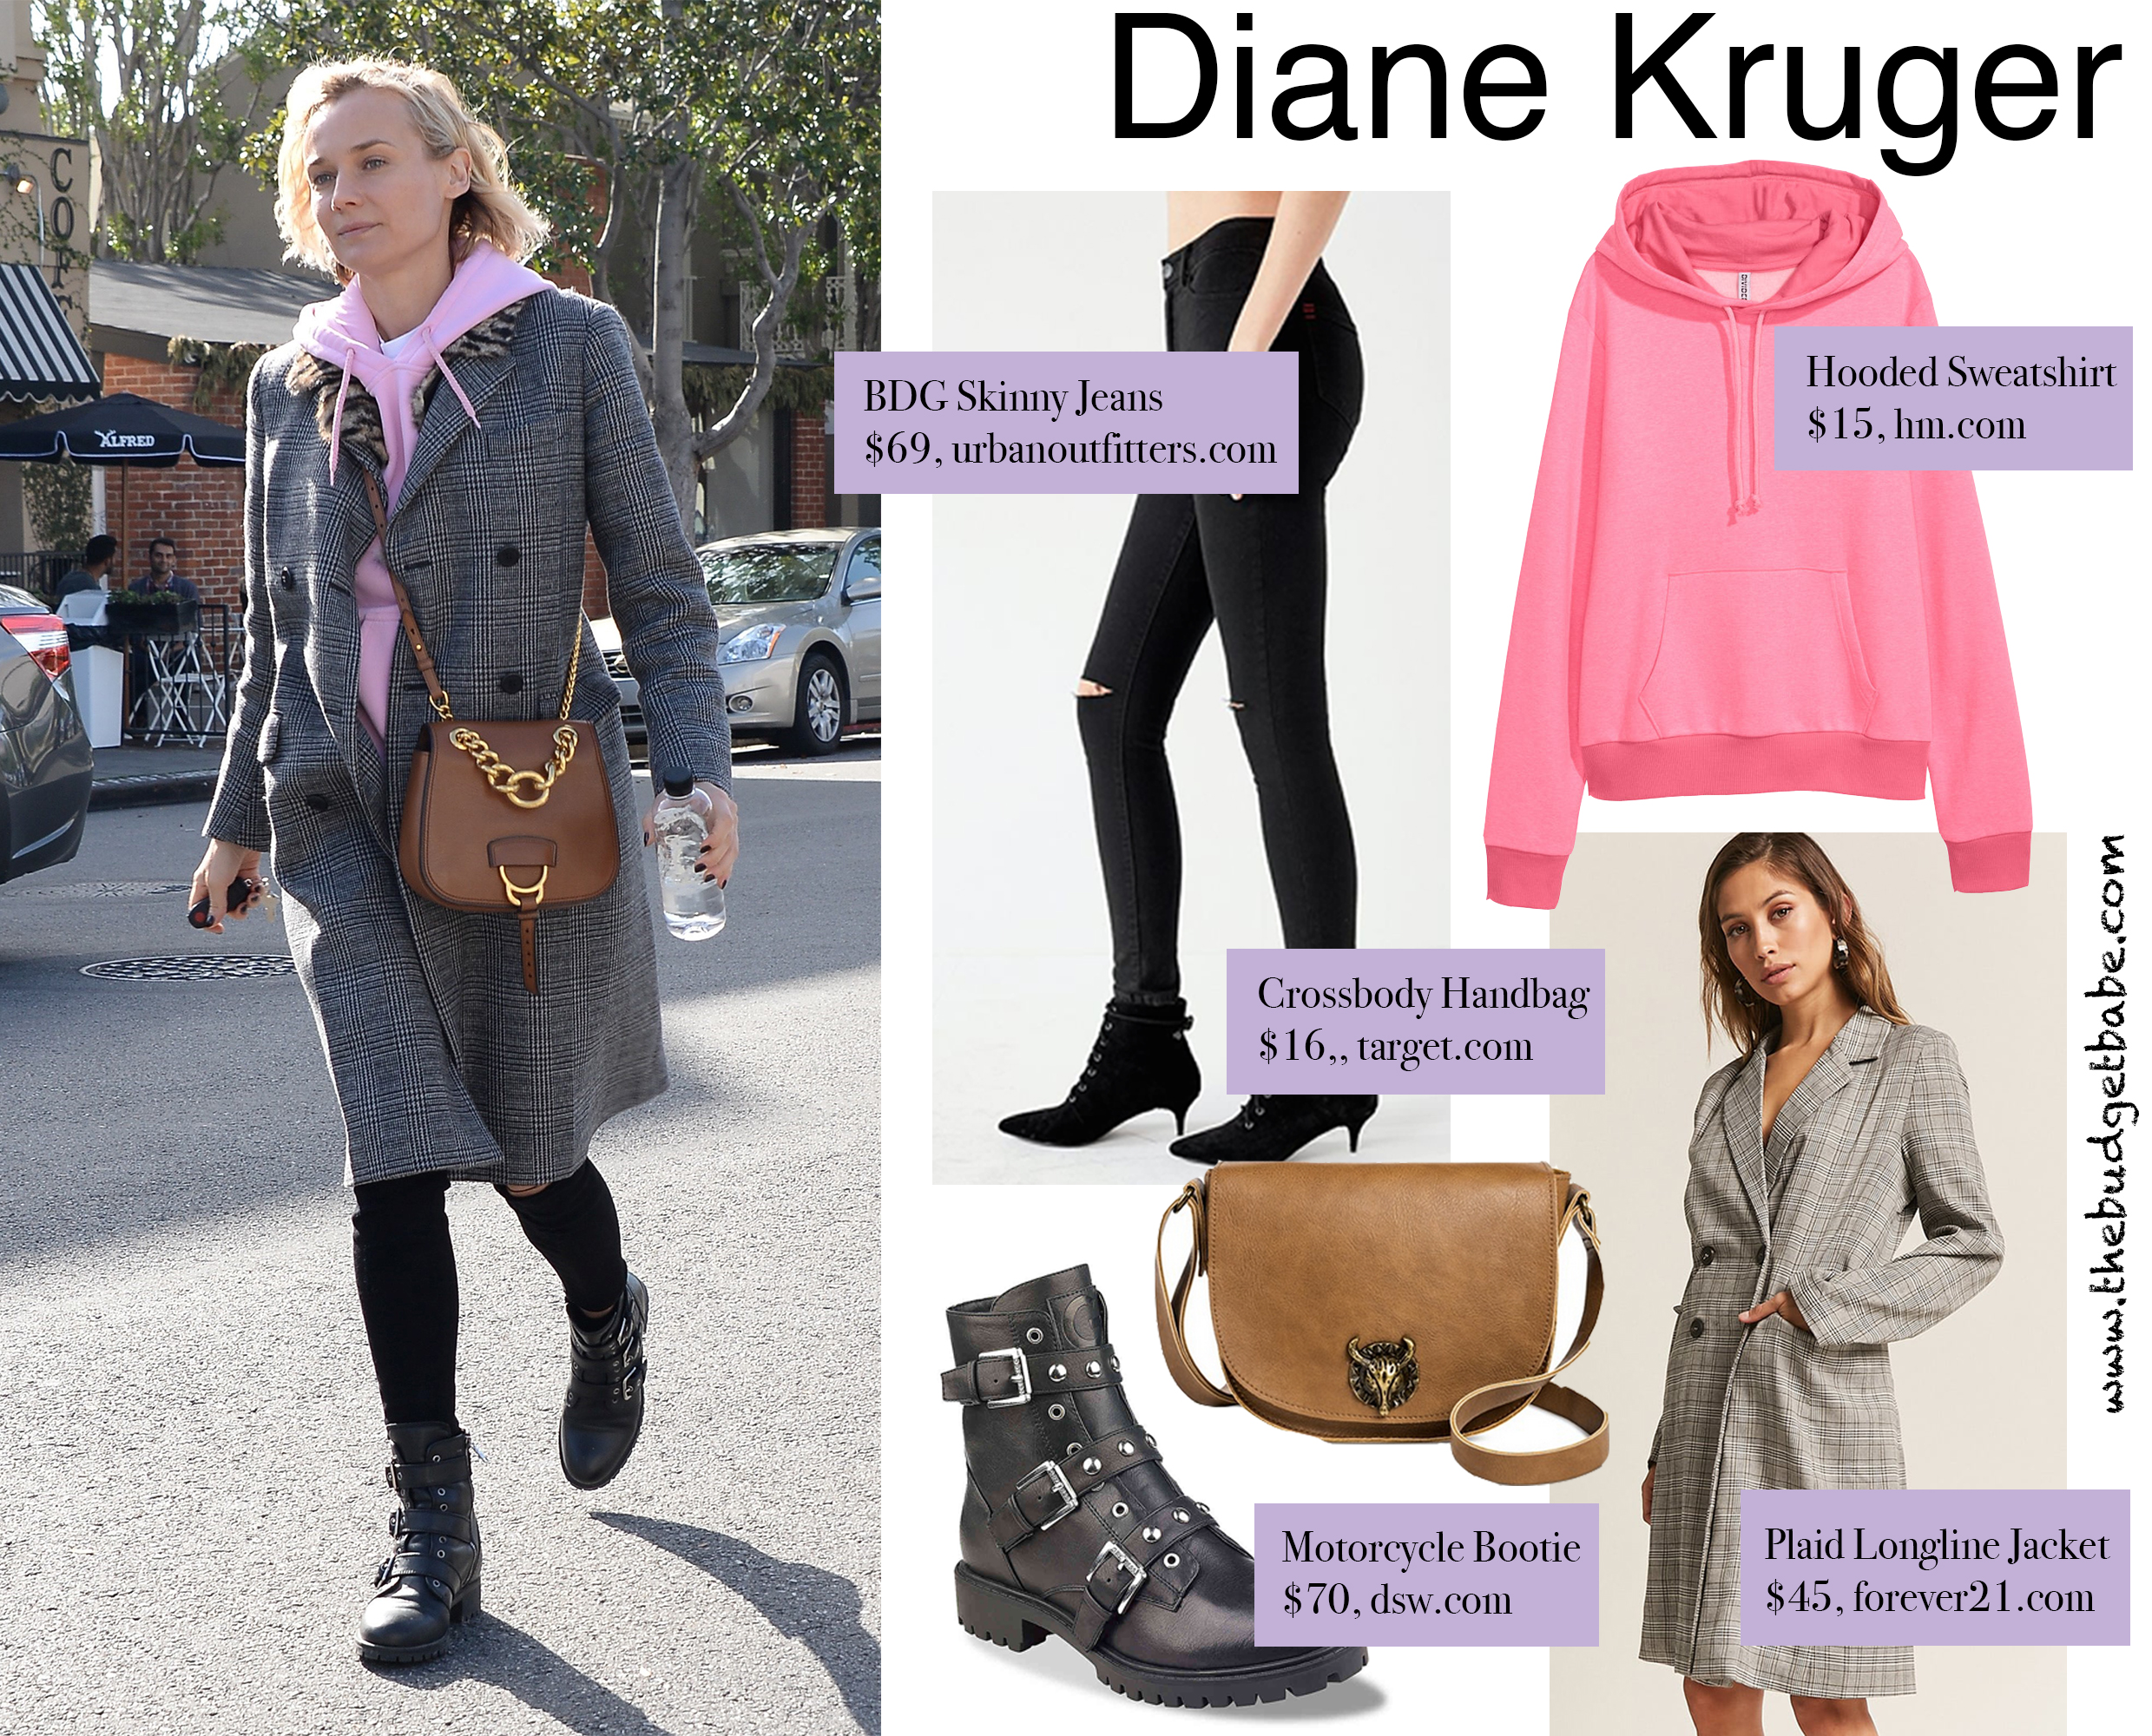 Diane Kruger looks cool and casual in her pink hoodie and Miu Miu bag.